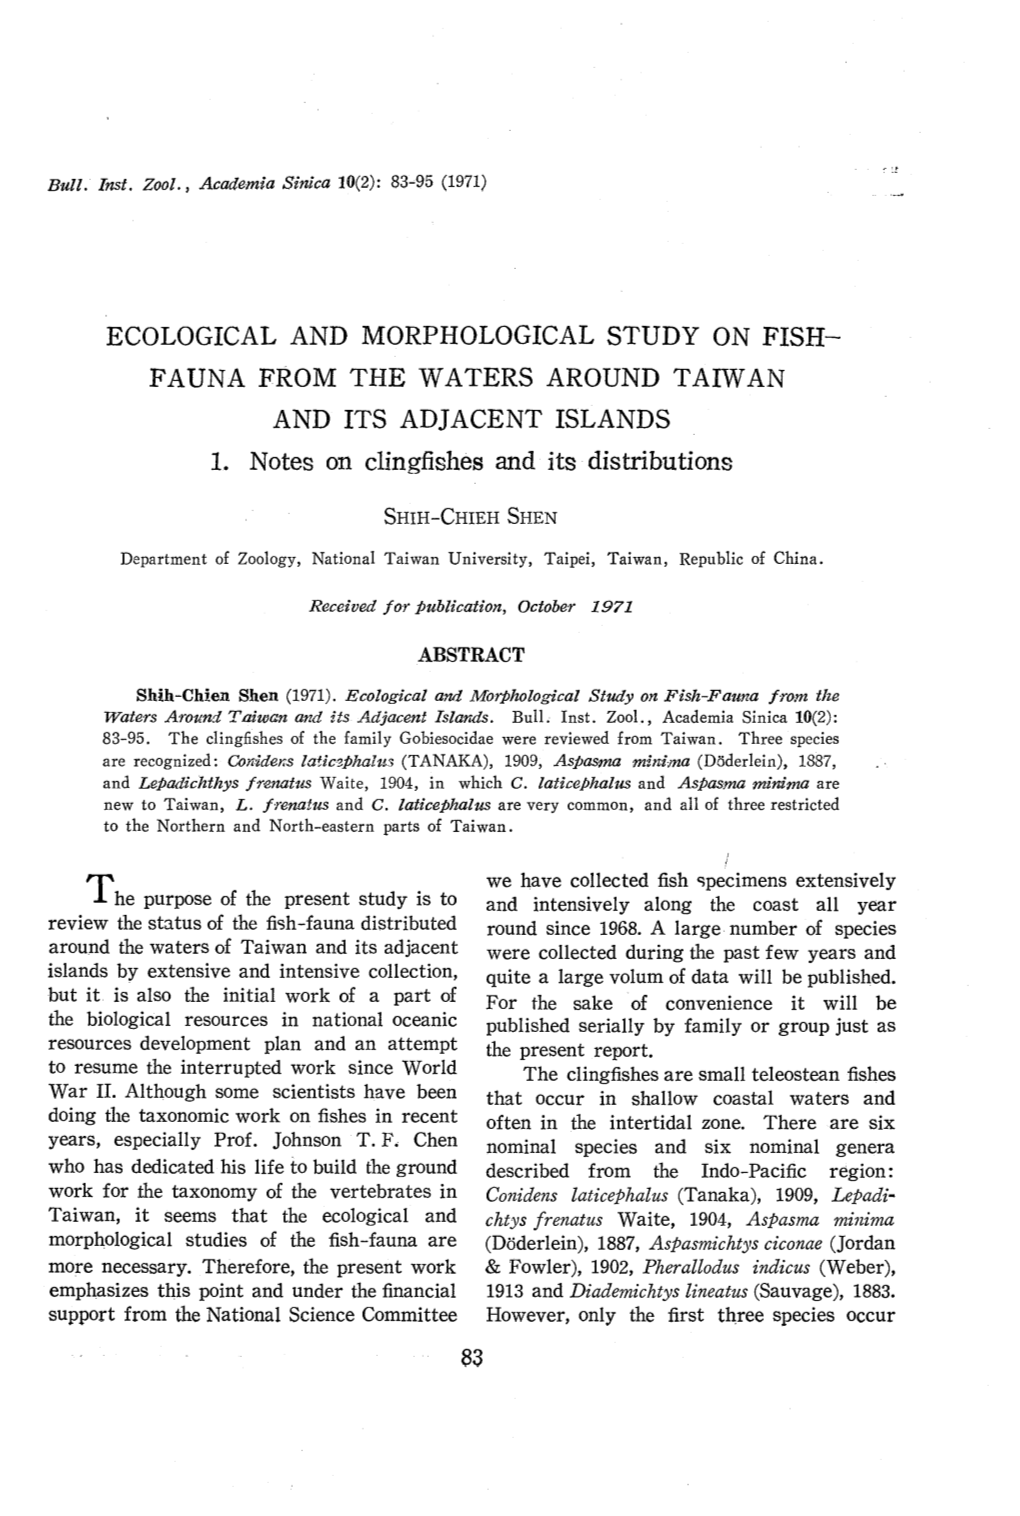 Ecological and Morphological Study on Fish-Fauna